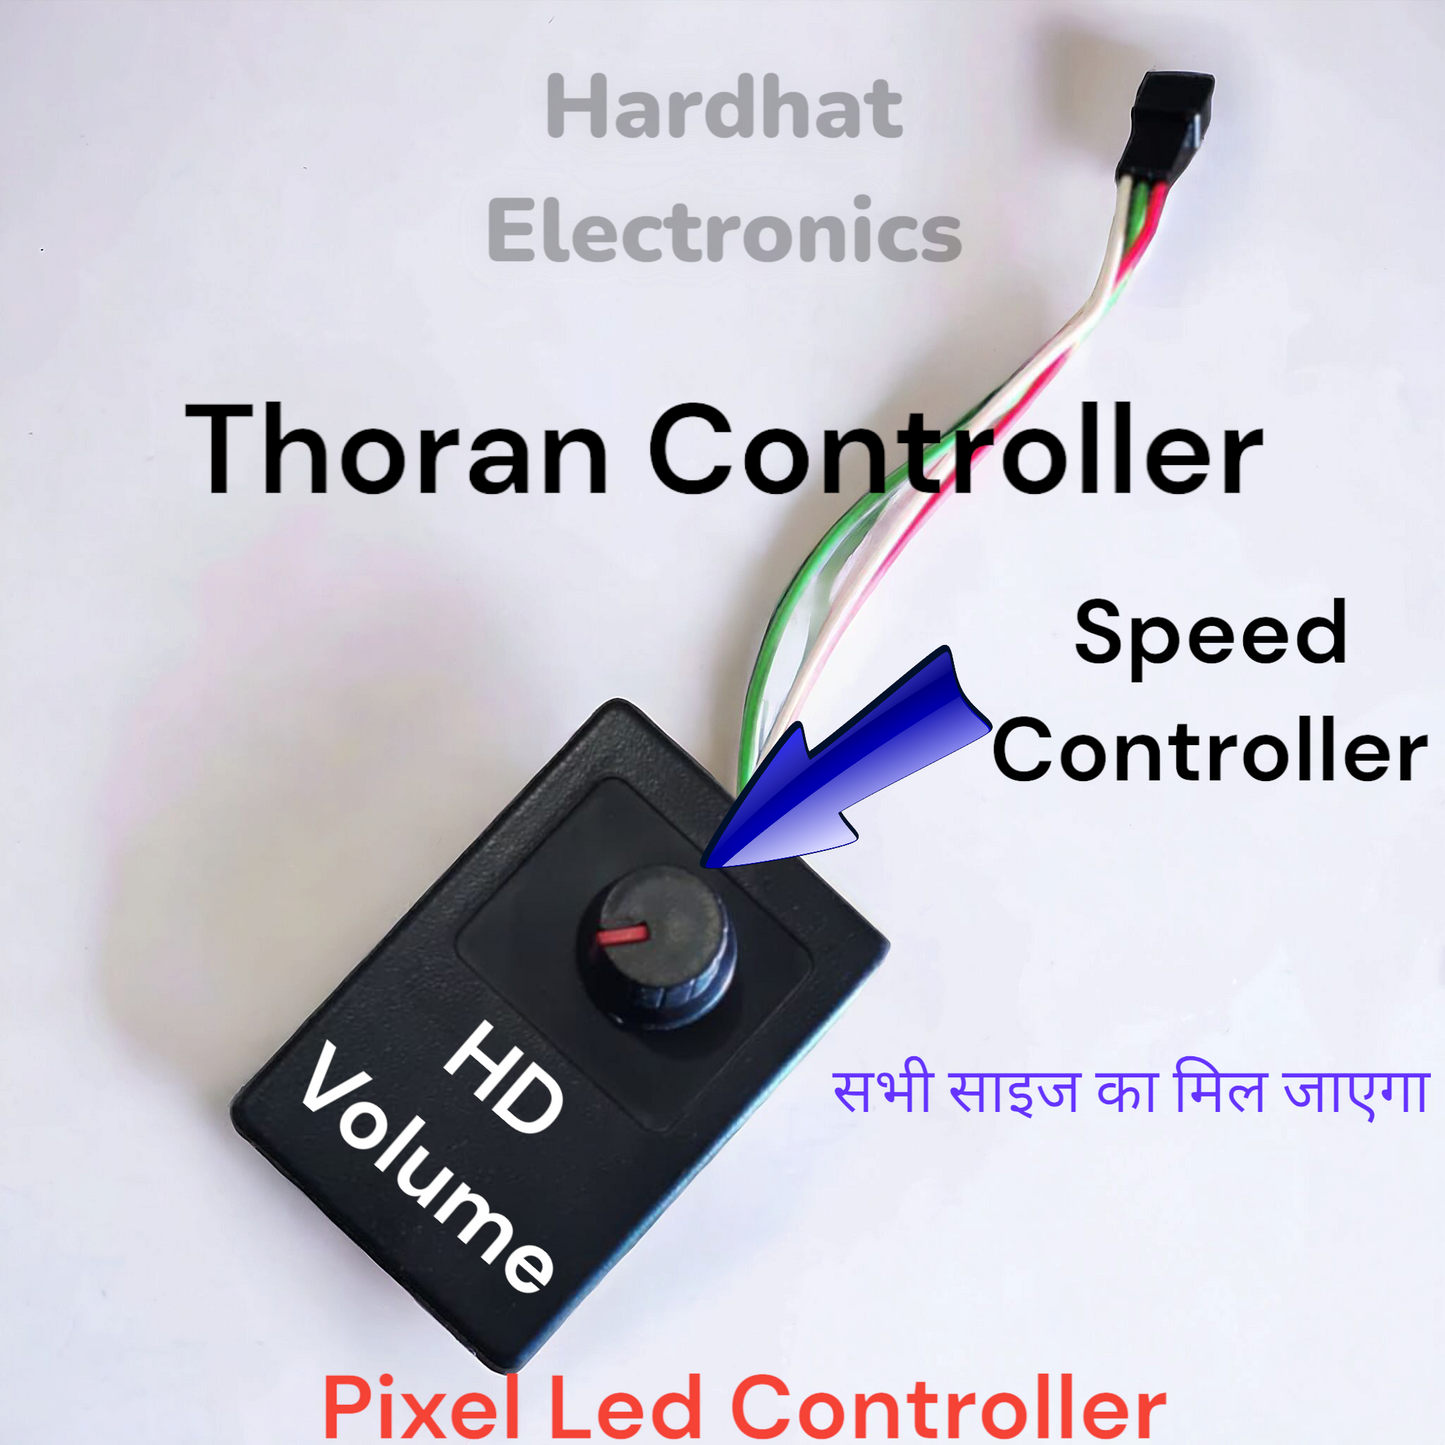 New Thoran Volume Controller